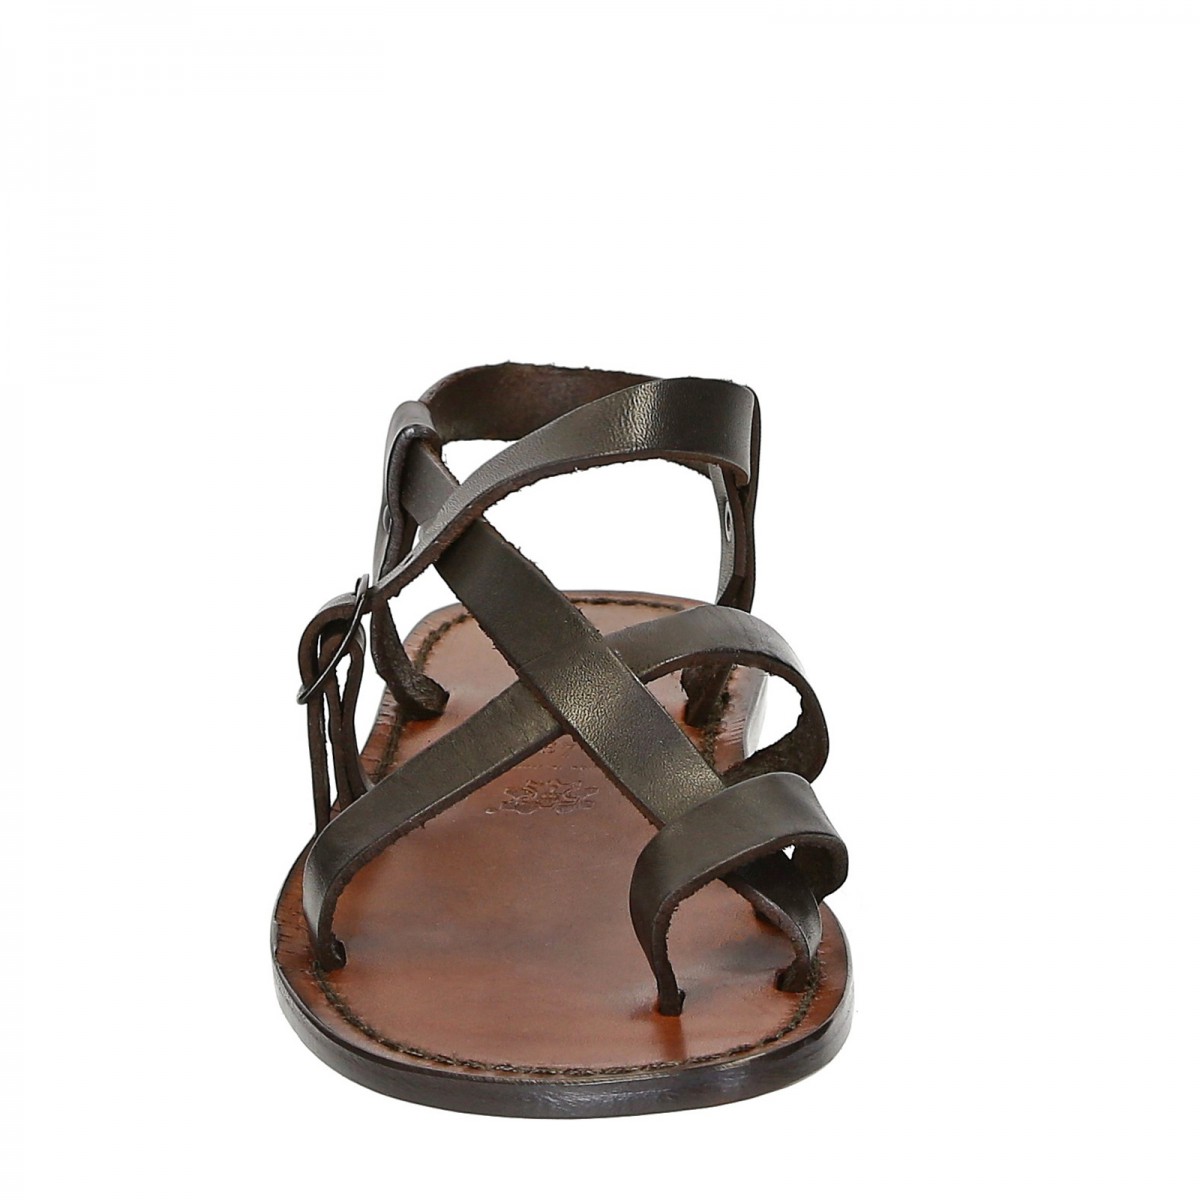 Handmade men's sandals in dark brown leather | Gianluca - The leather ...